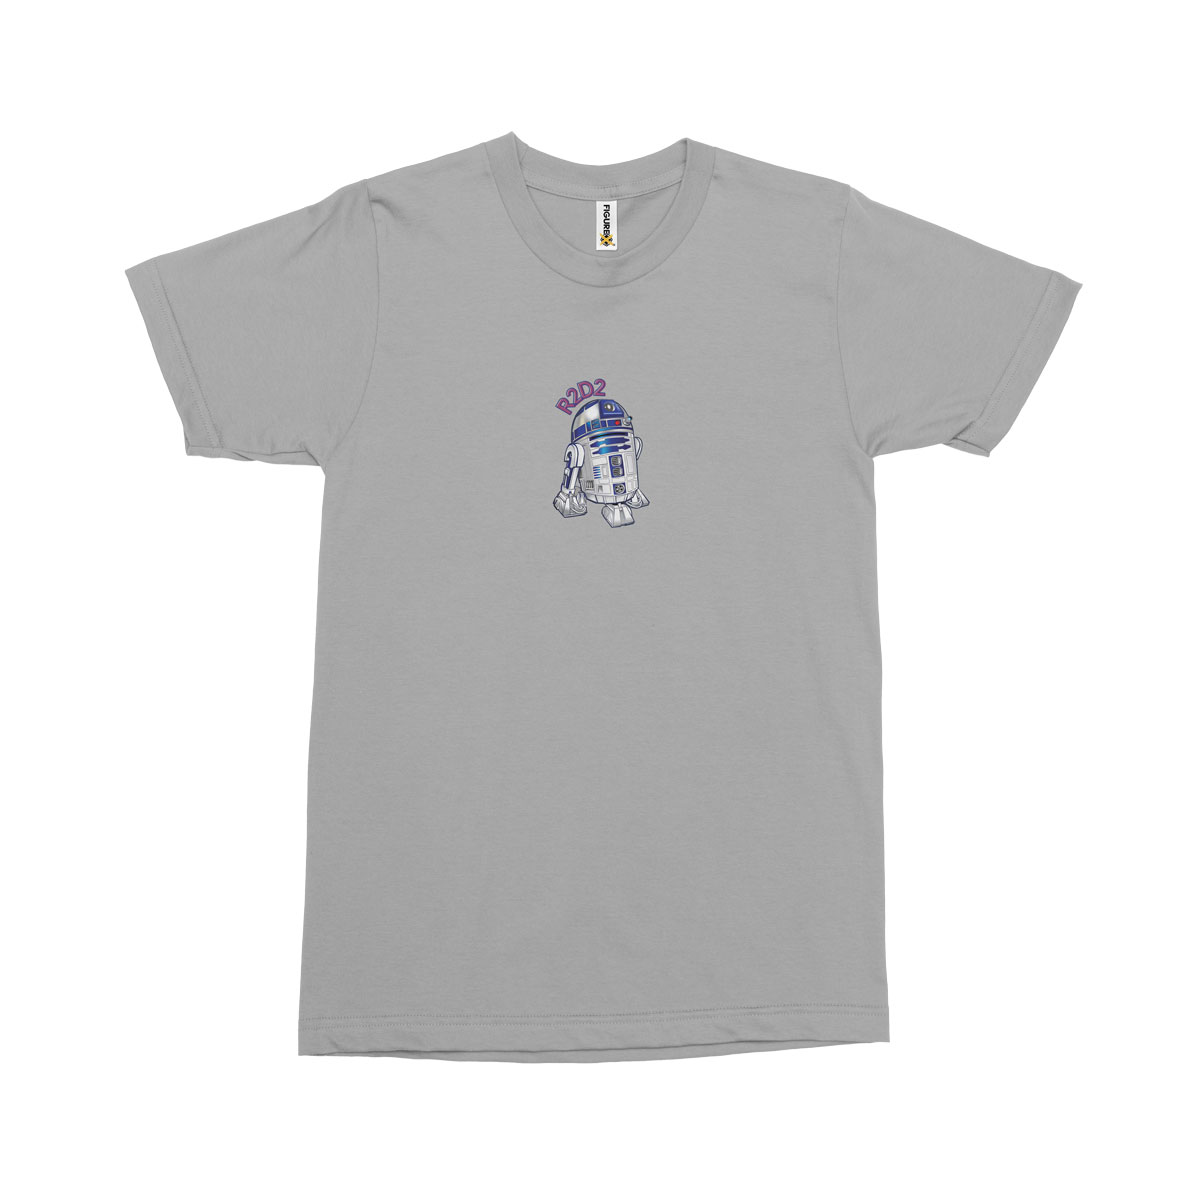 Star wars r2d2 tisort g - star wars r2d2 baskılı erkek t-shirt - figurex